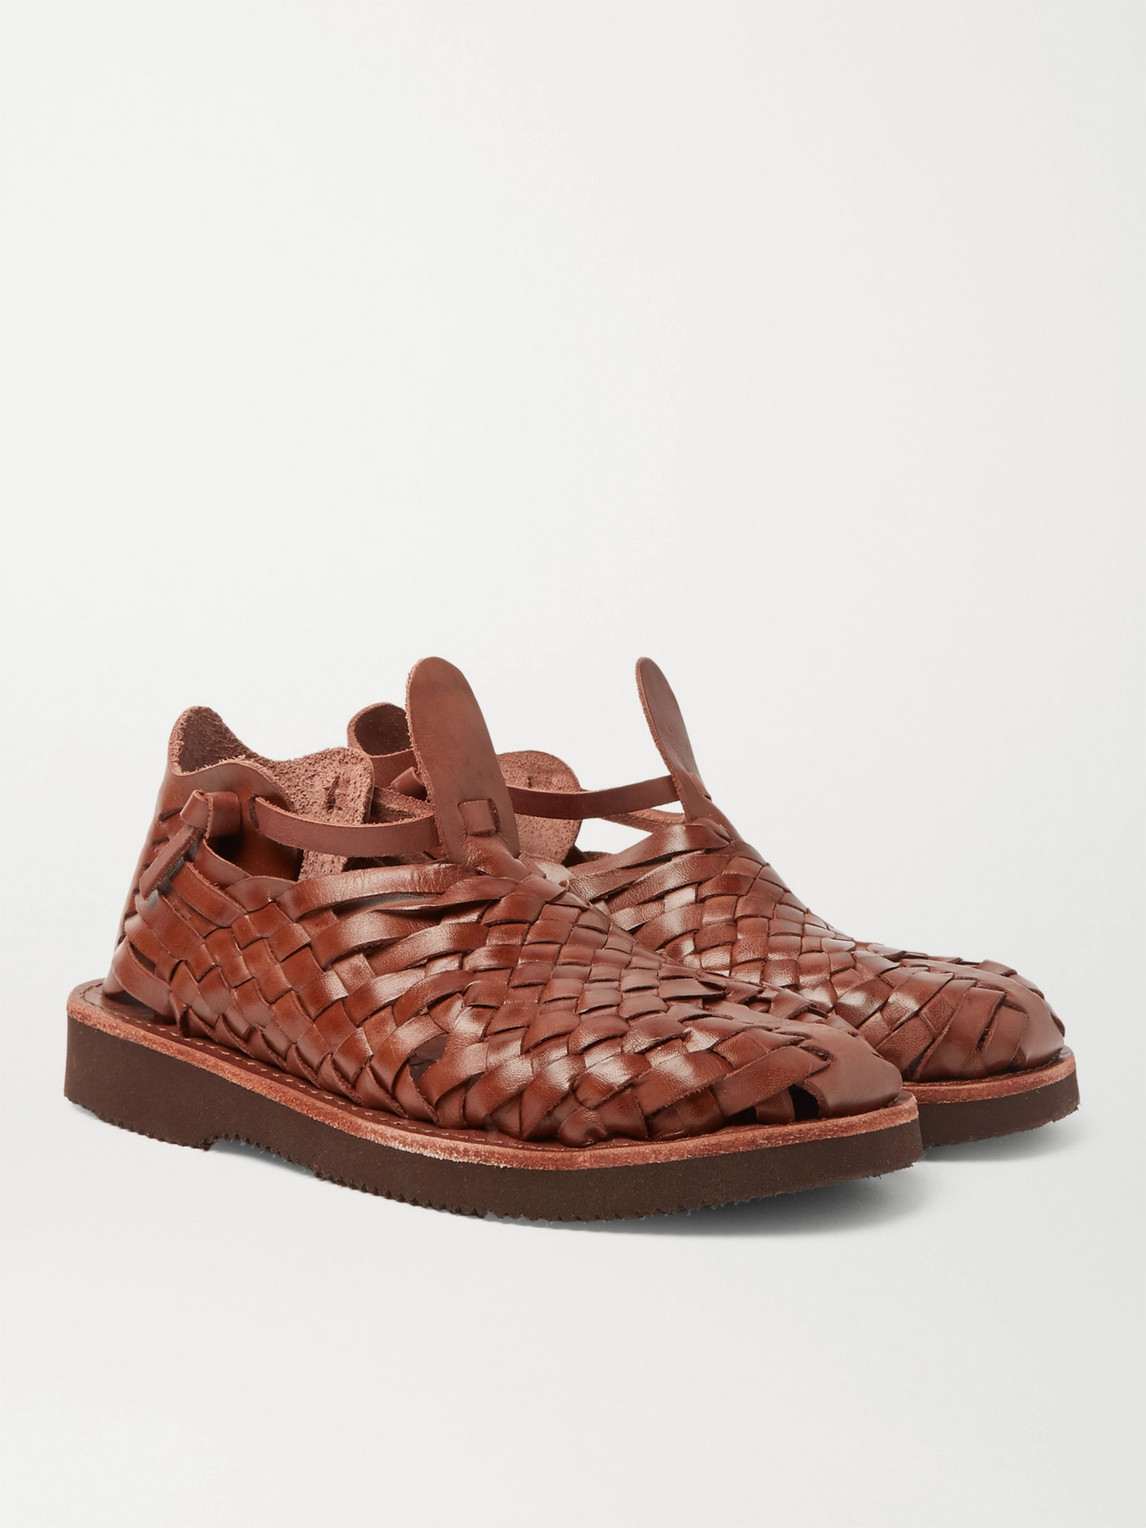 woven leather huarache sandals